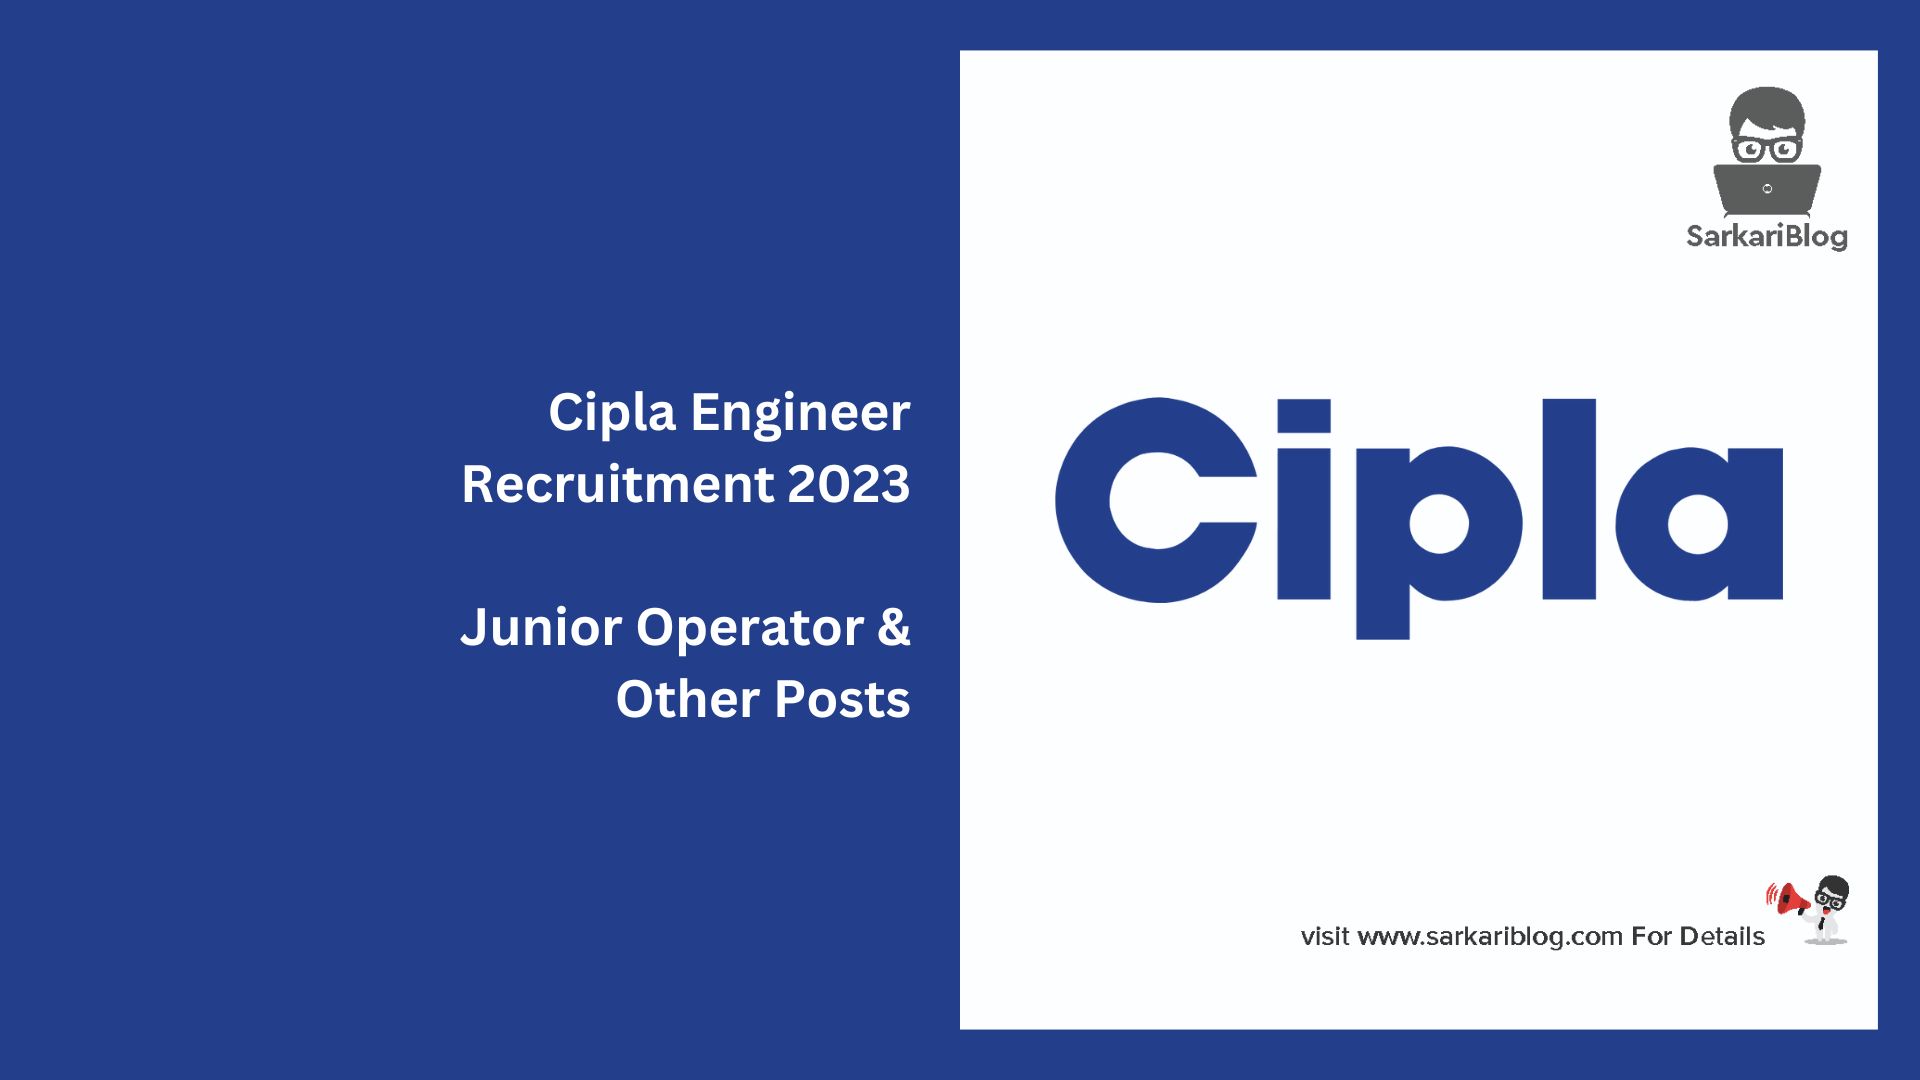 Cipla Engineer Recruitment 2023